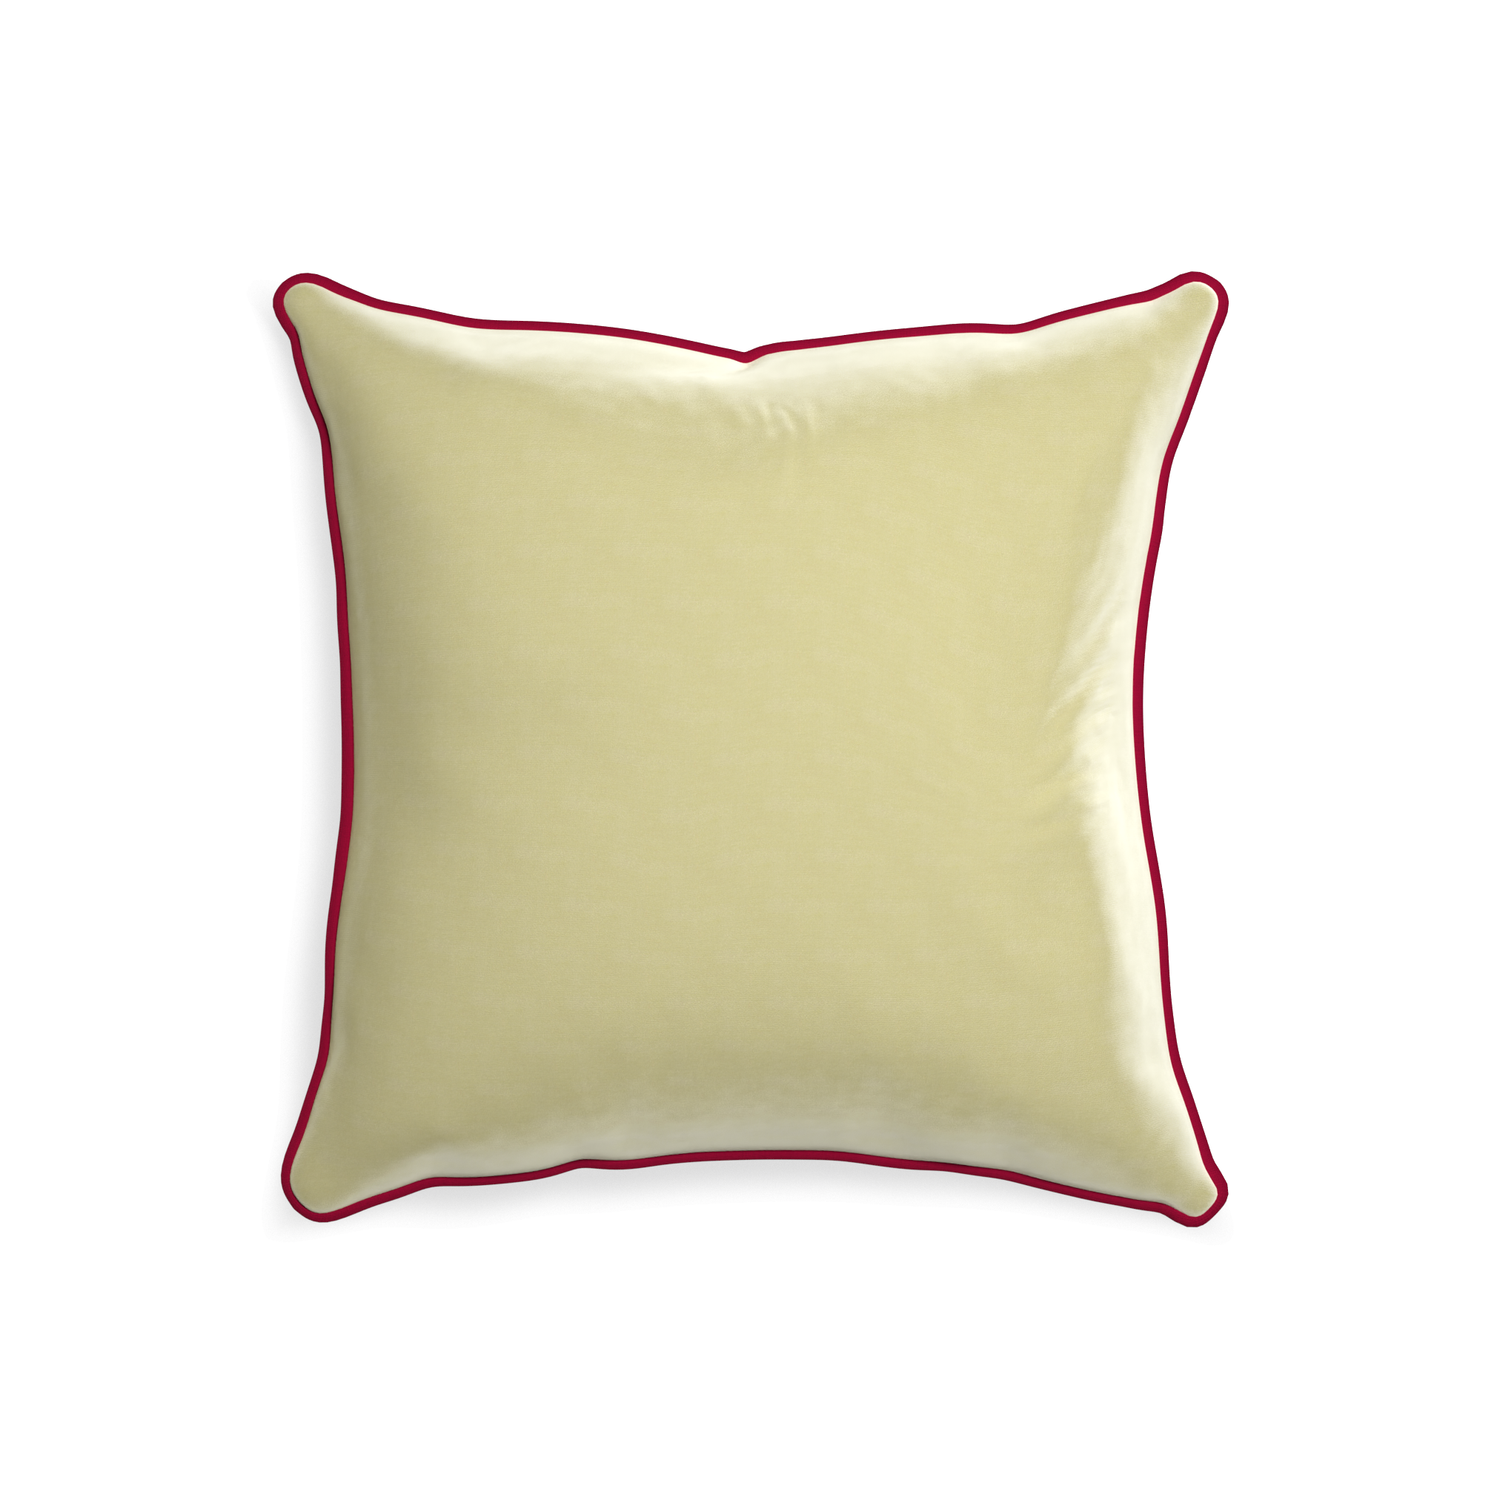 square light green velvet pillow with dark red piping